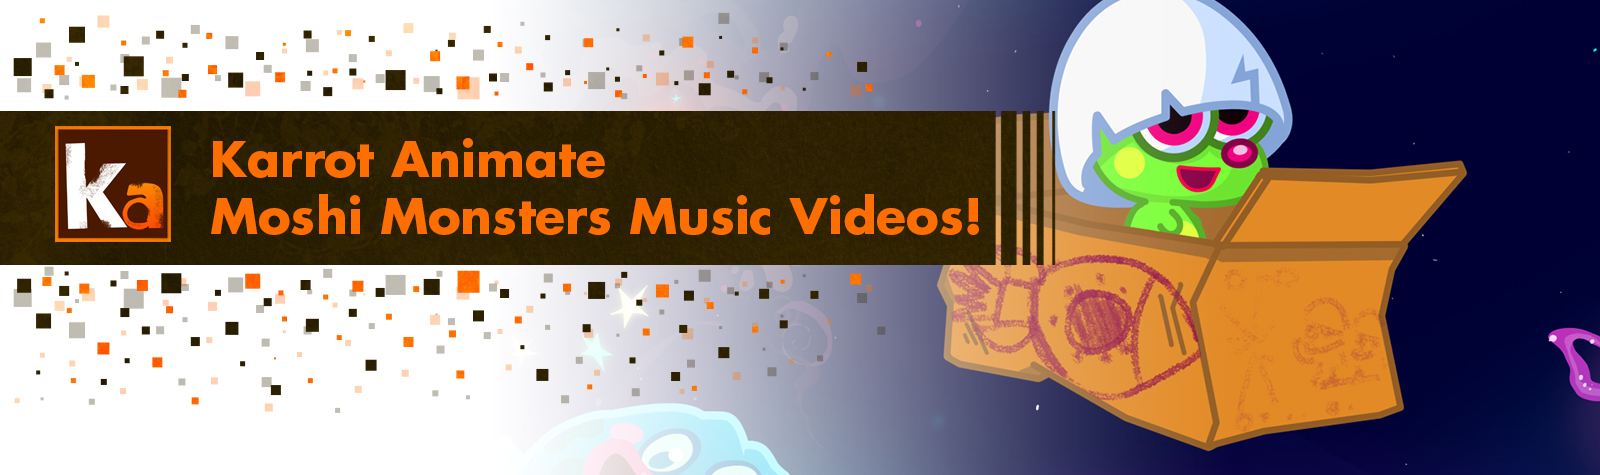 Karrot Animate Moshi Monsters Music Videos!